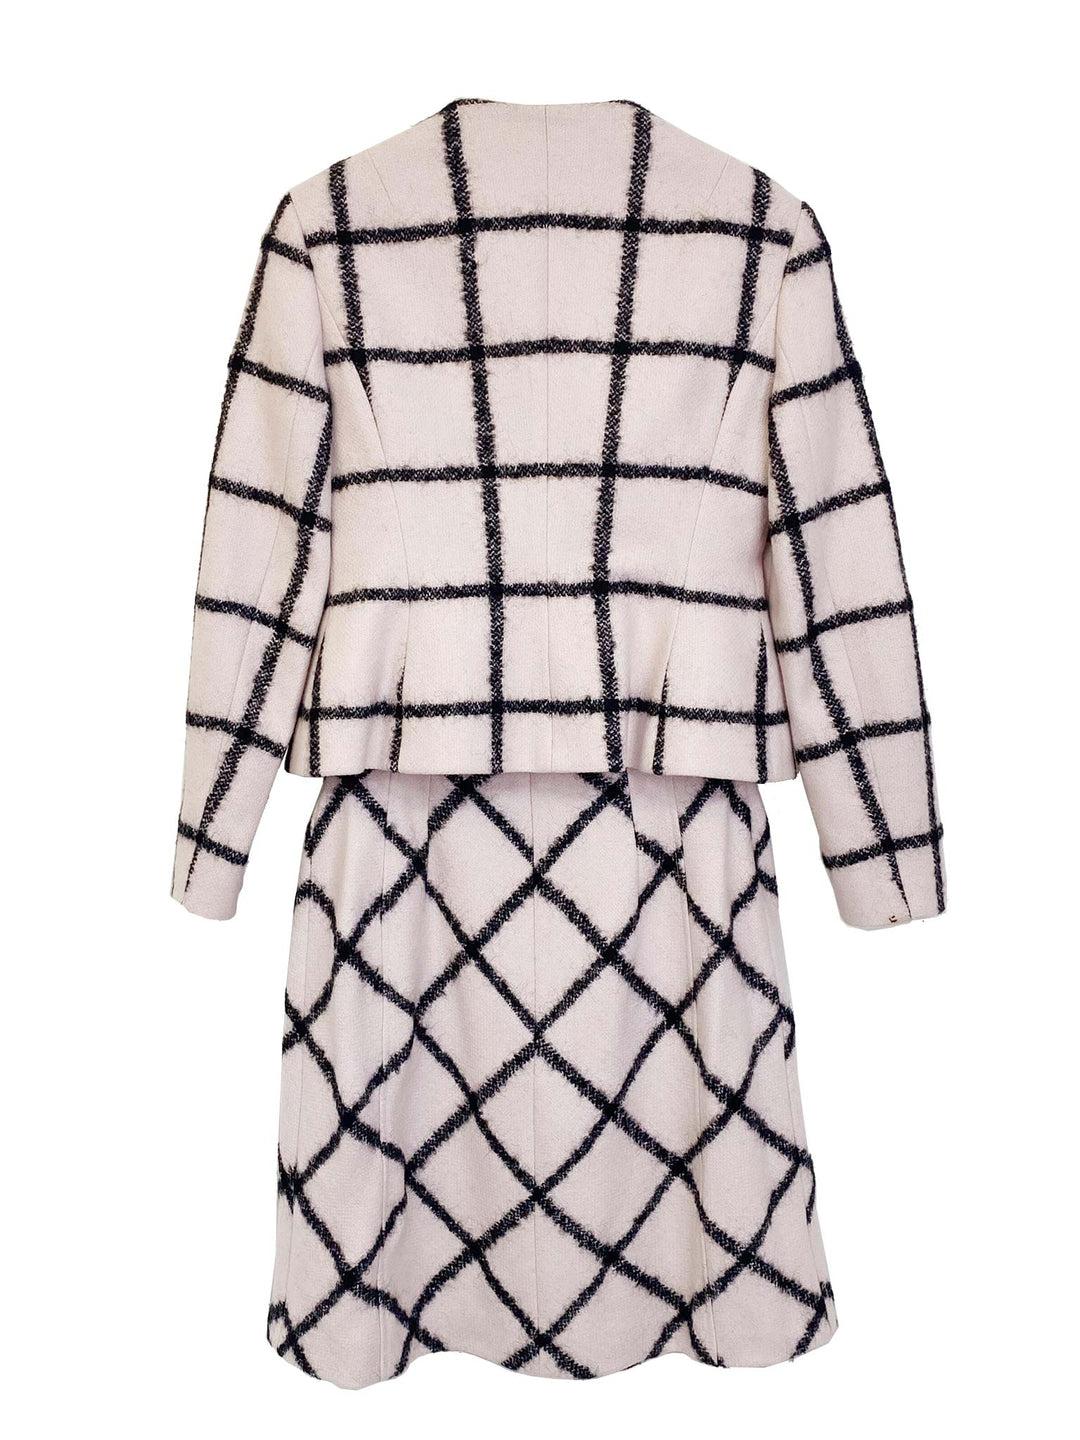 Women's Christian Dior Wool Jacket & Skirt Set For Sale